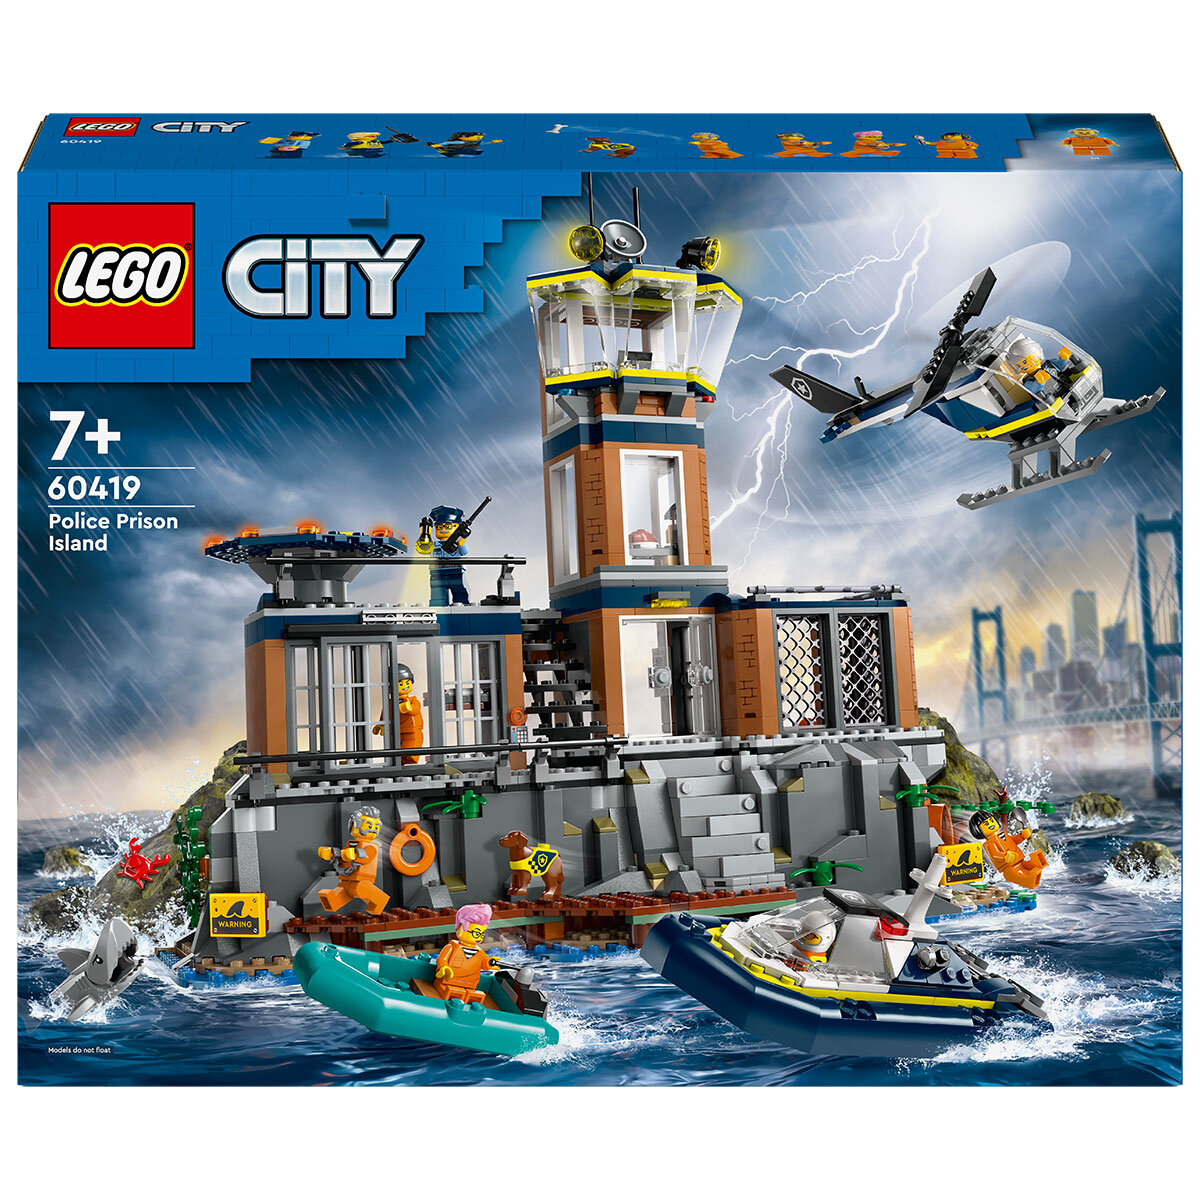 Buy LEGO City Police Prison Island Box Image at Costco.co.uk